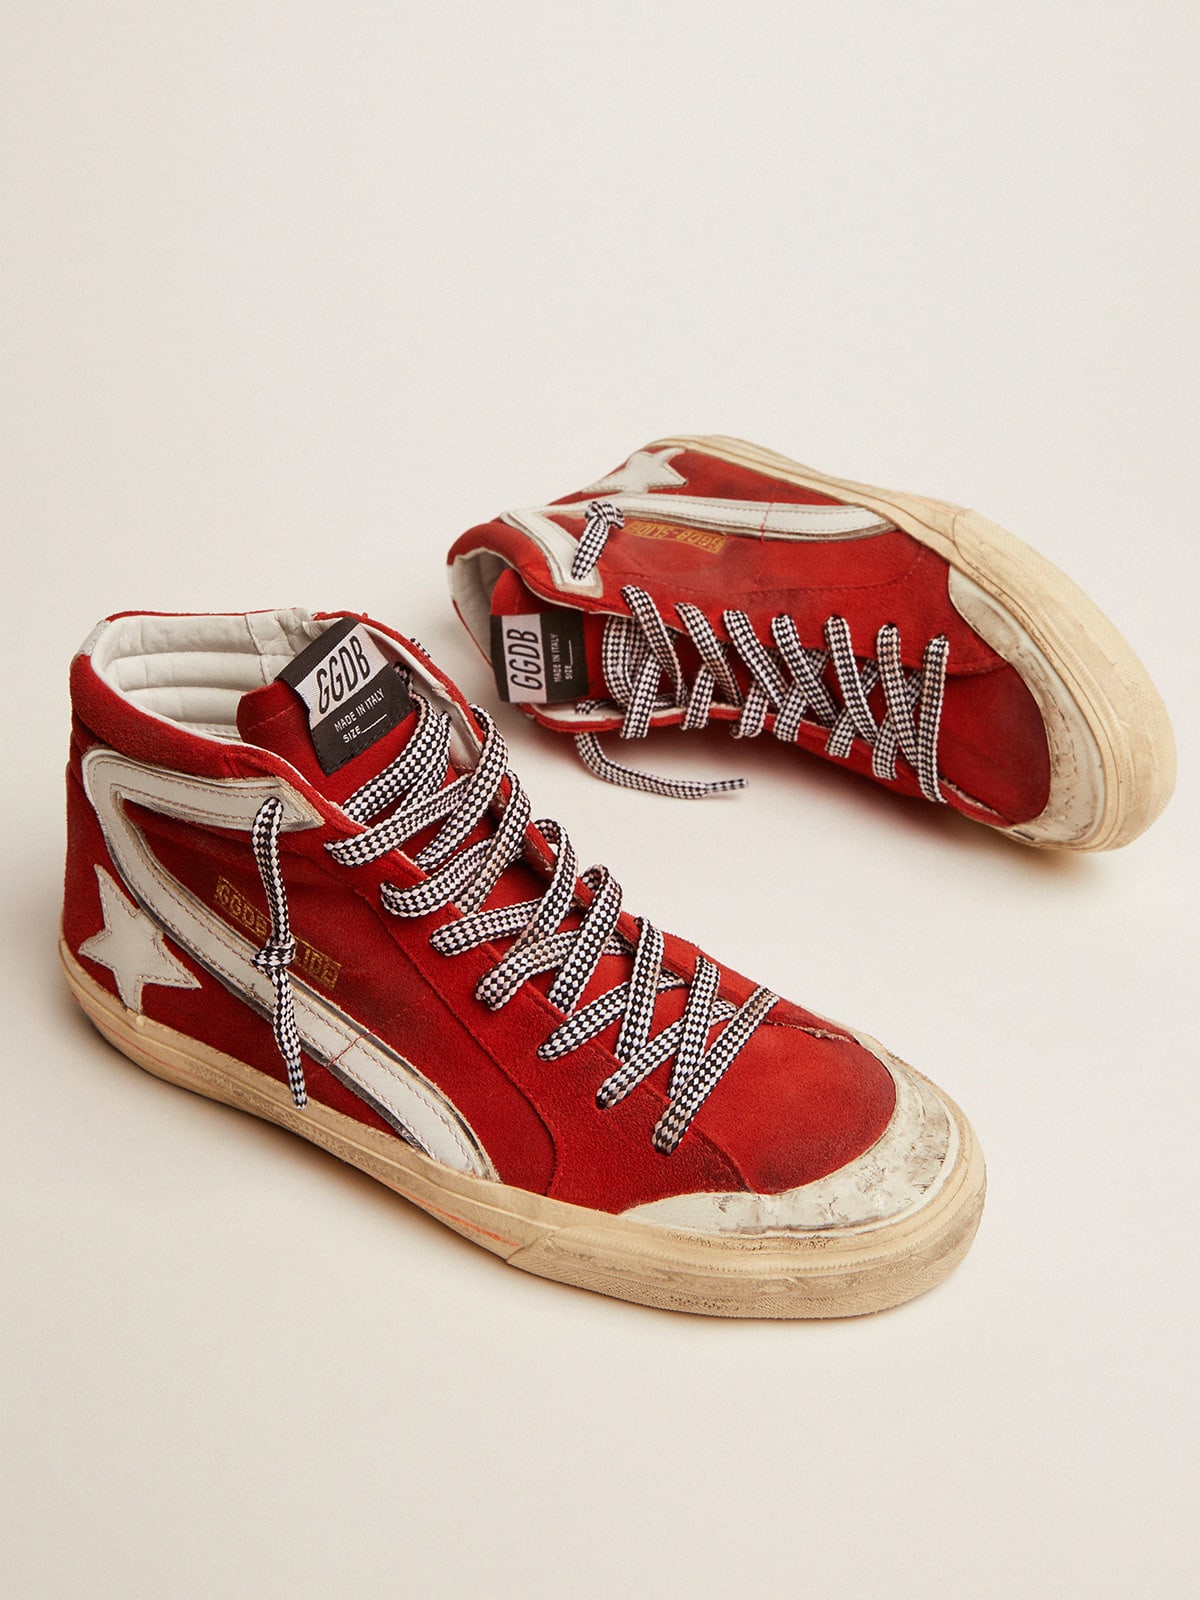 Golden Goose - Sneakers Slide Penstar en daim rouge avec détails blancs in 